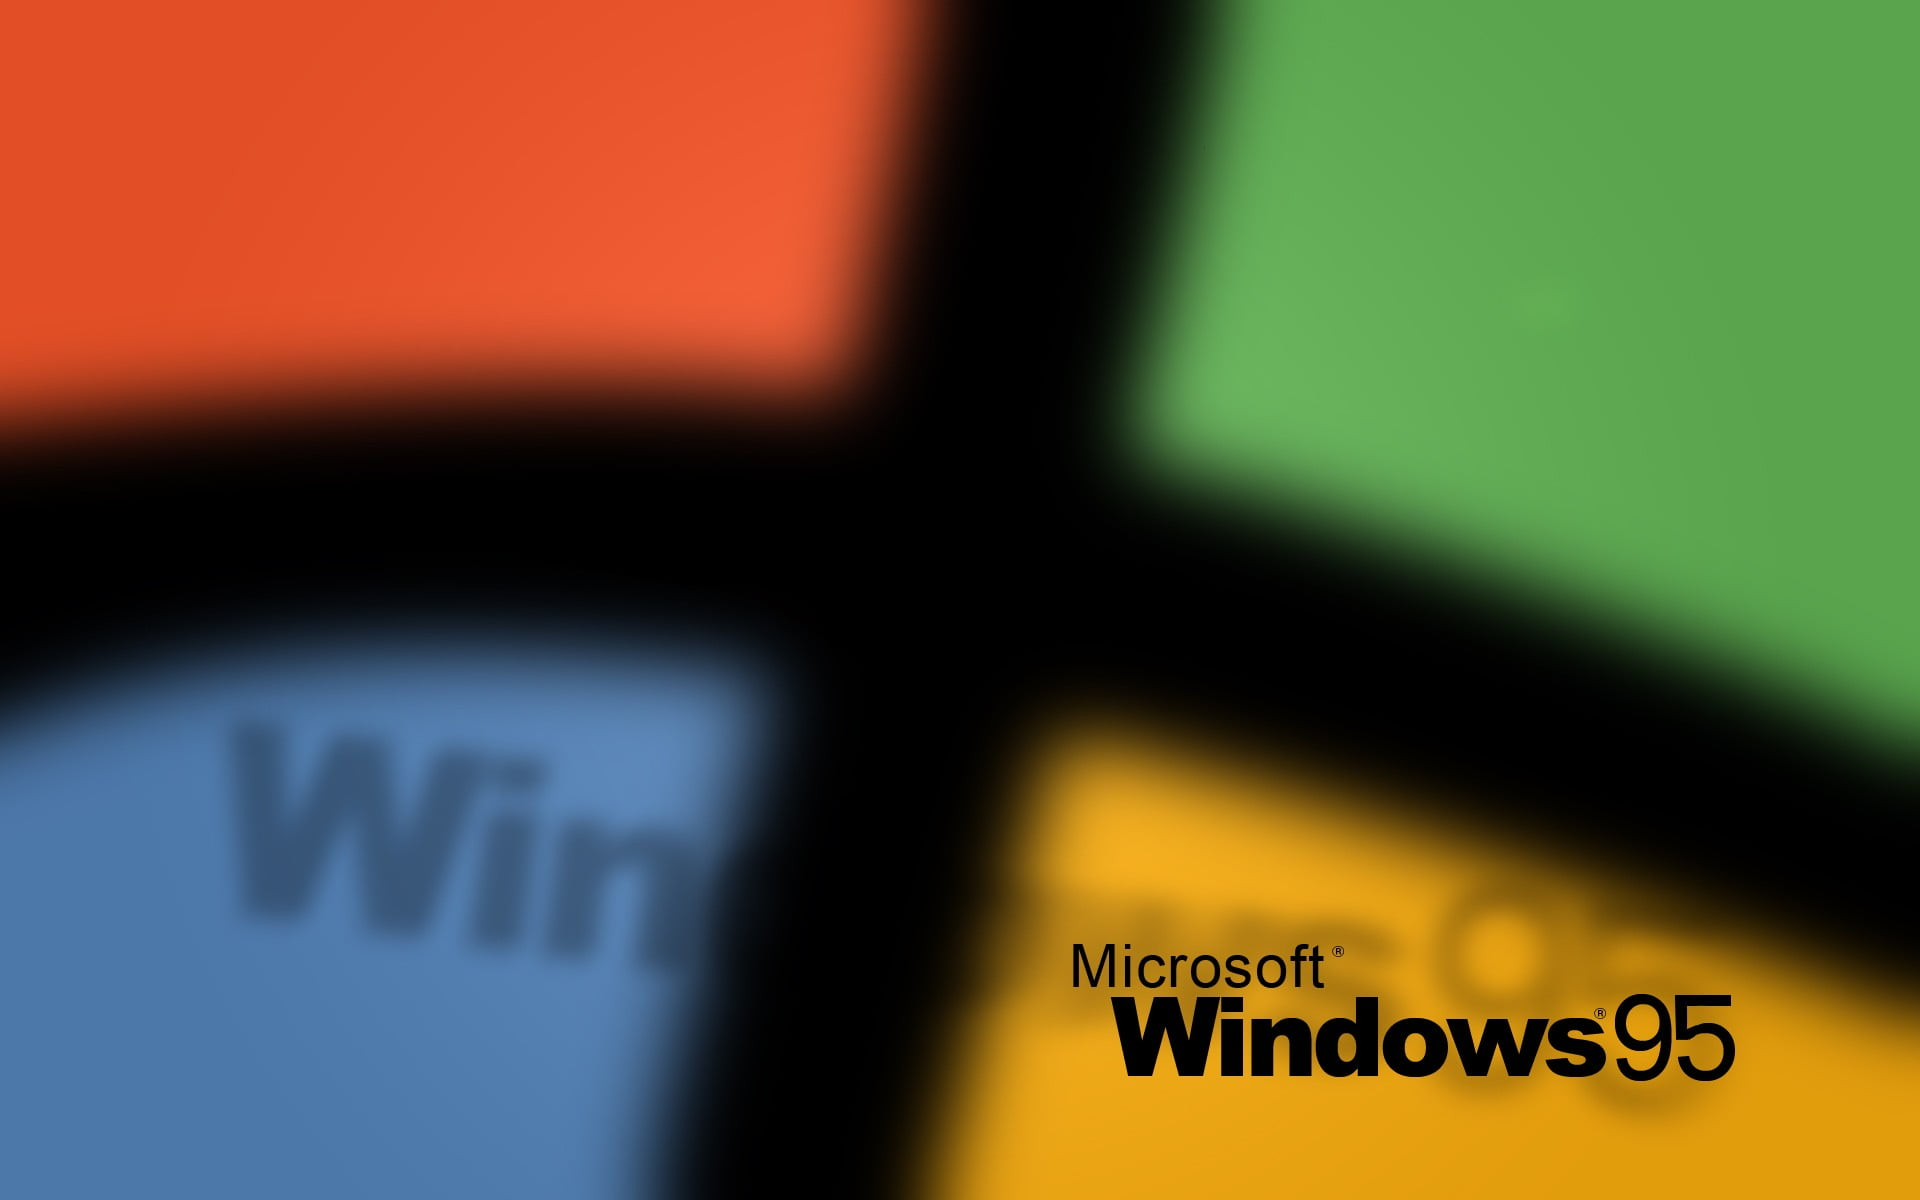 Microsoft Windows 95 logo, operating system, vintage wallpaper, text, western script